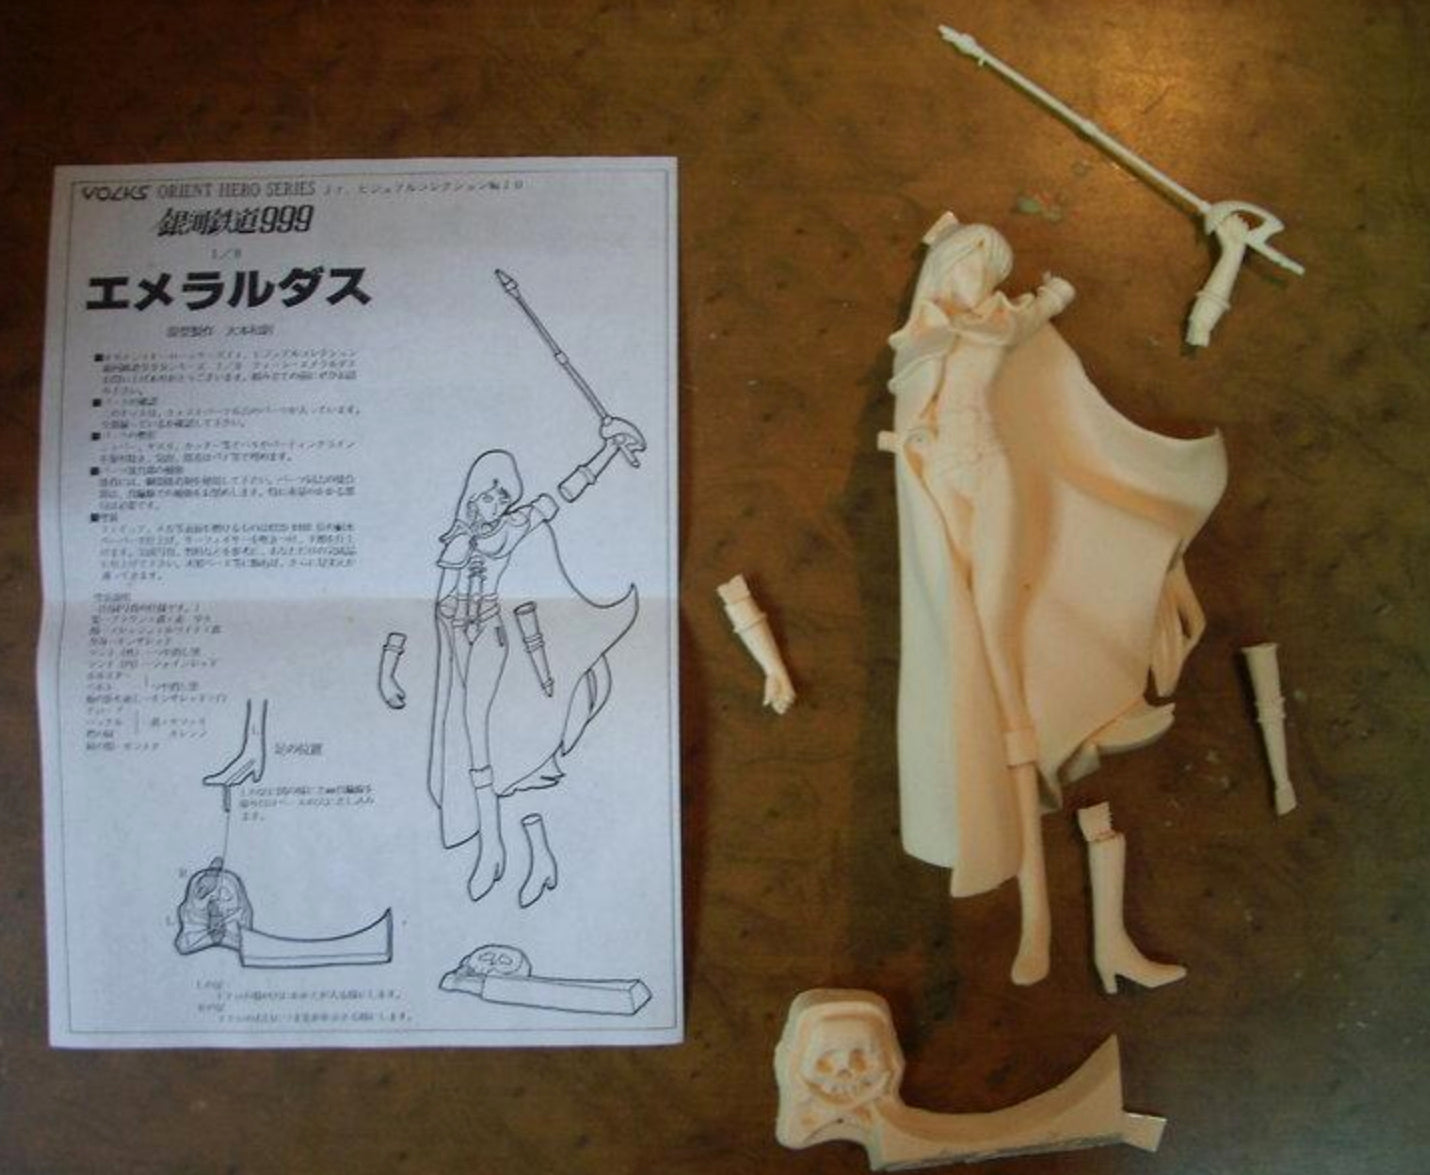 Volks 1/8 Orient Hero Series Leiji Matsumoto Galaxy Express 999 Queen Emeraldas Cold Cast Model Kit Figure